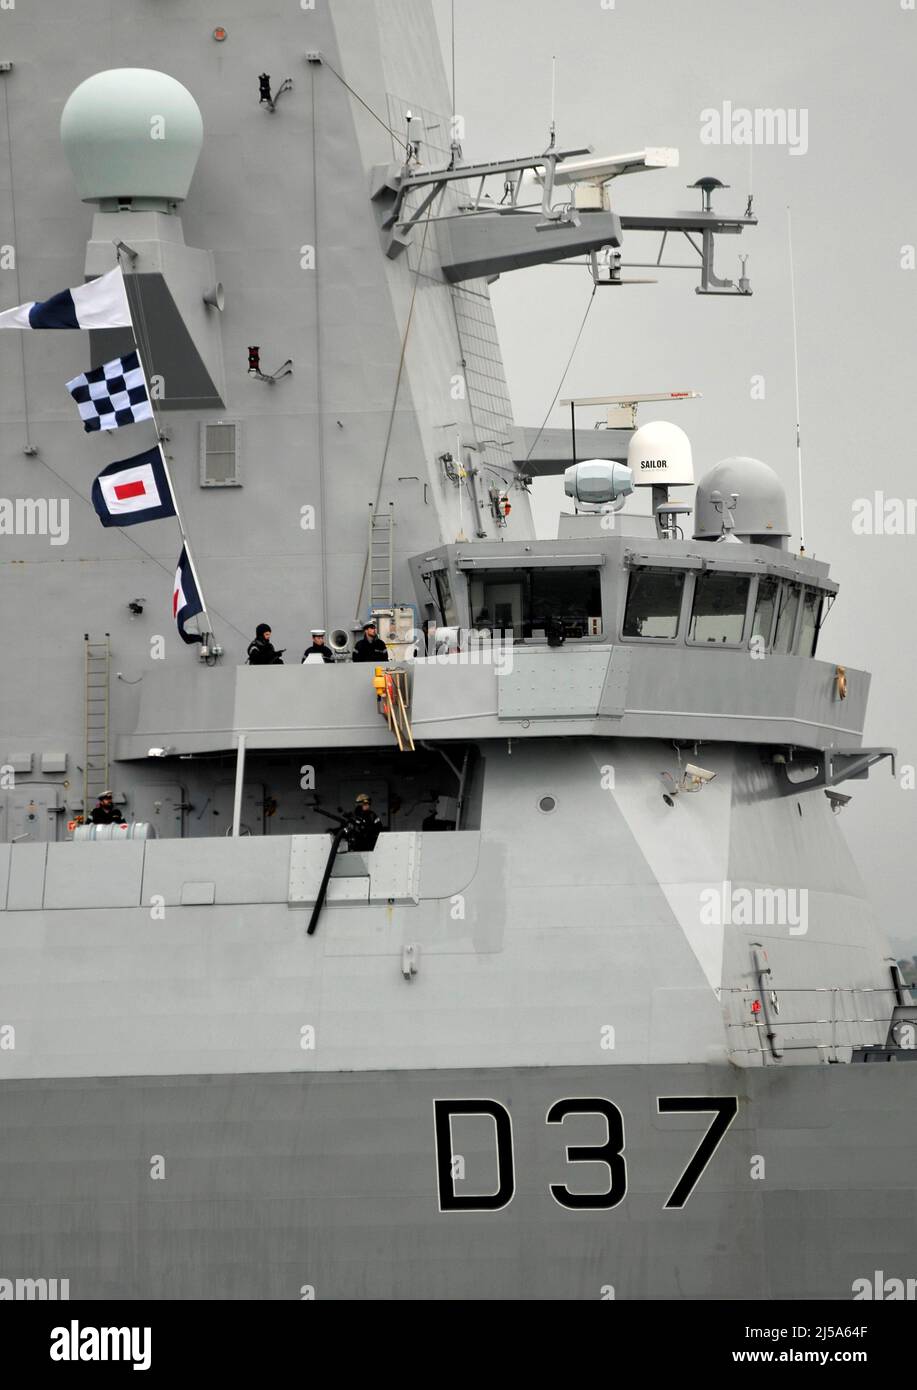 AJAXNETPHOTO. 30TH MAGGIO, 2014.PORTSMOUTH, INGHILTERRA. - TIPO 45 CACCIATORPEDINIERE HMS DUNCAN ENTRA NEL PORTO. PHOTO:JONATHAN EASTLAND/AJAX REF:DTH143005 9243 Foto Stock